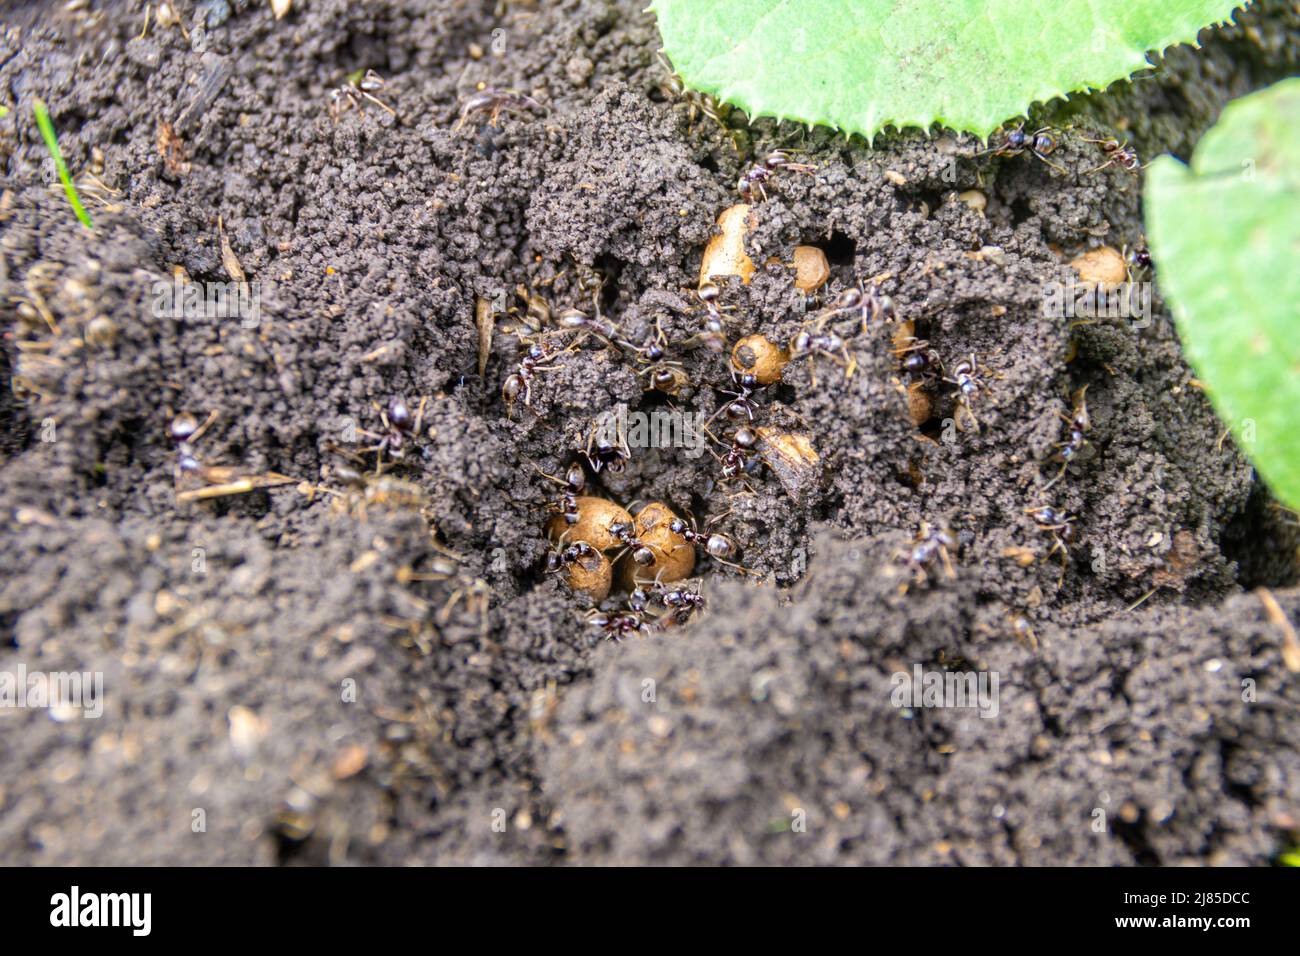 garden ants restoring their nest after excavation in the garden, selective focus Stock Photo